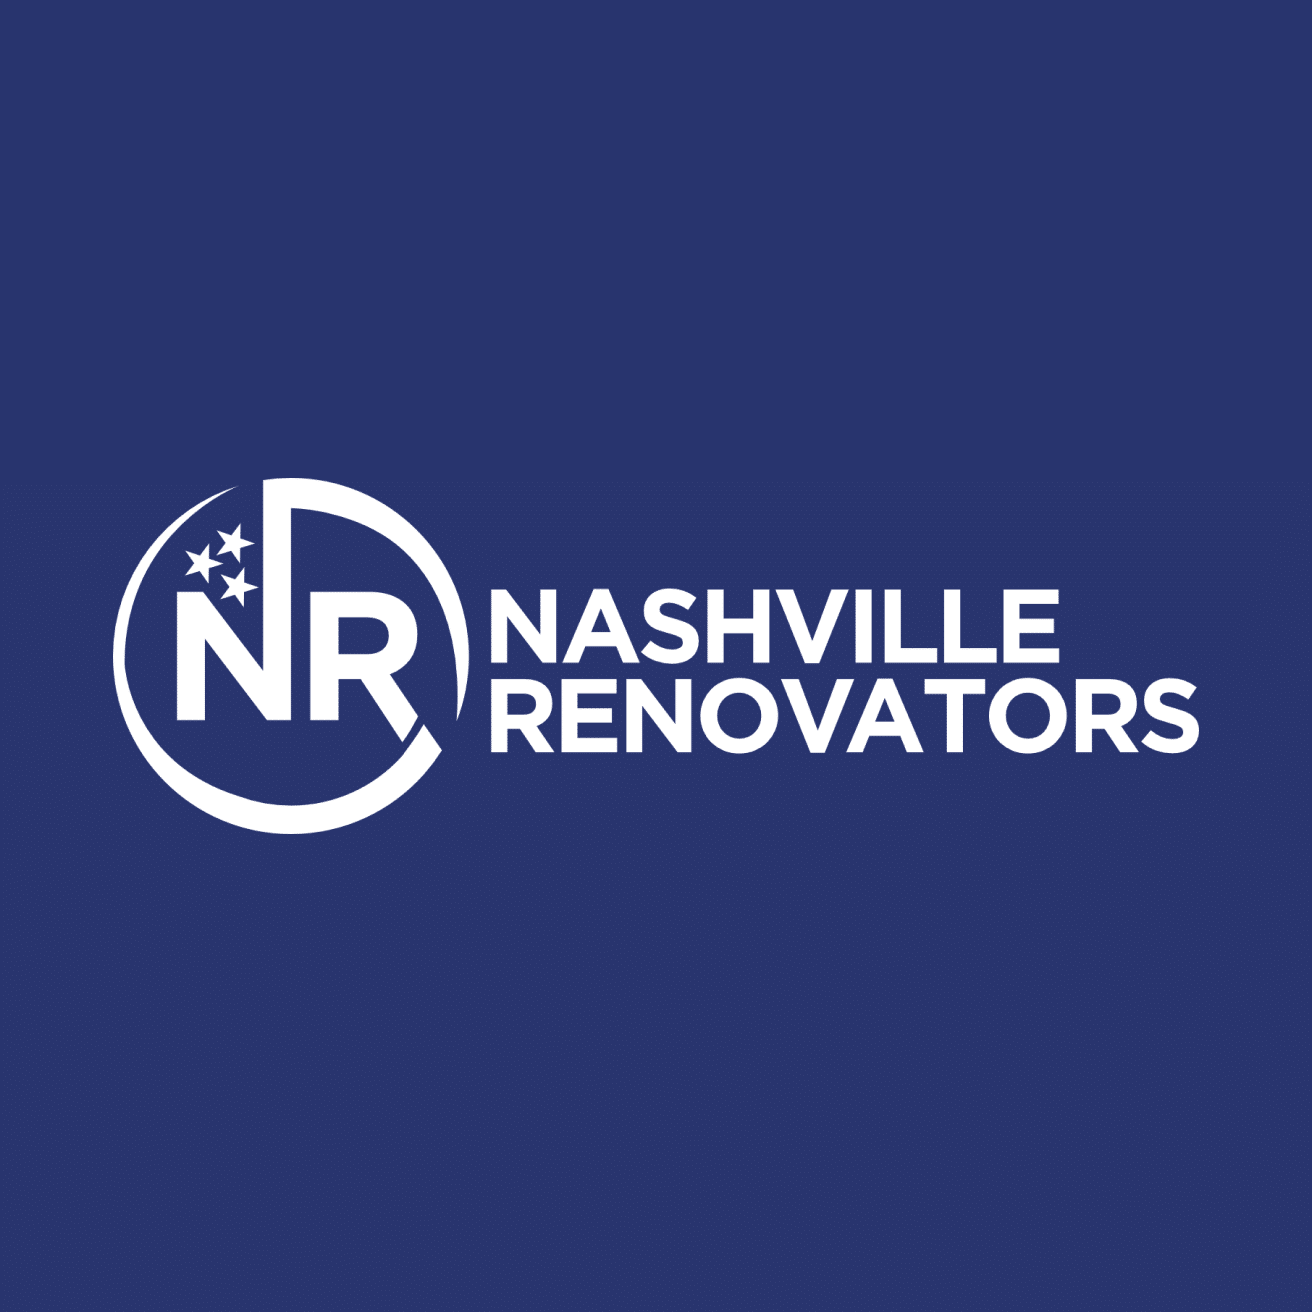 Nashville Renovators logo